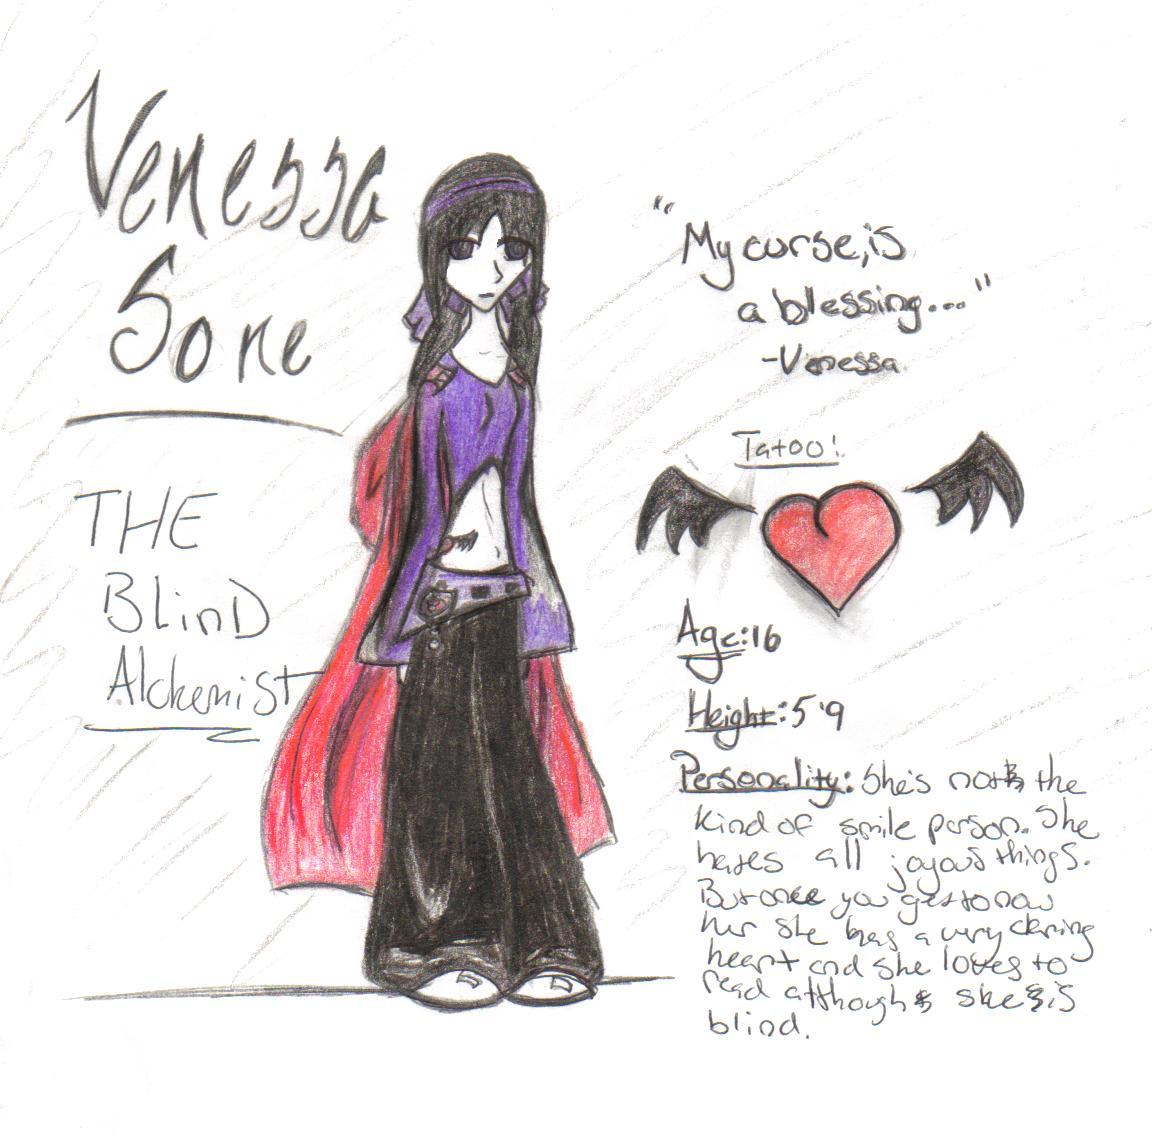 Venessa Sone the Blind Alchemist by rego_vampire